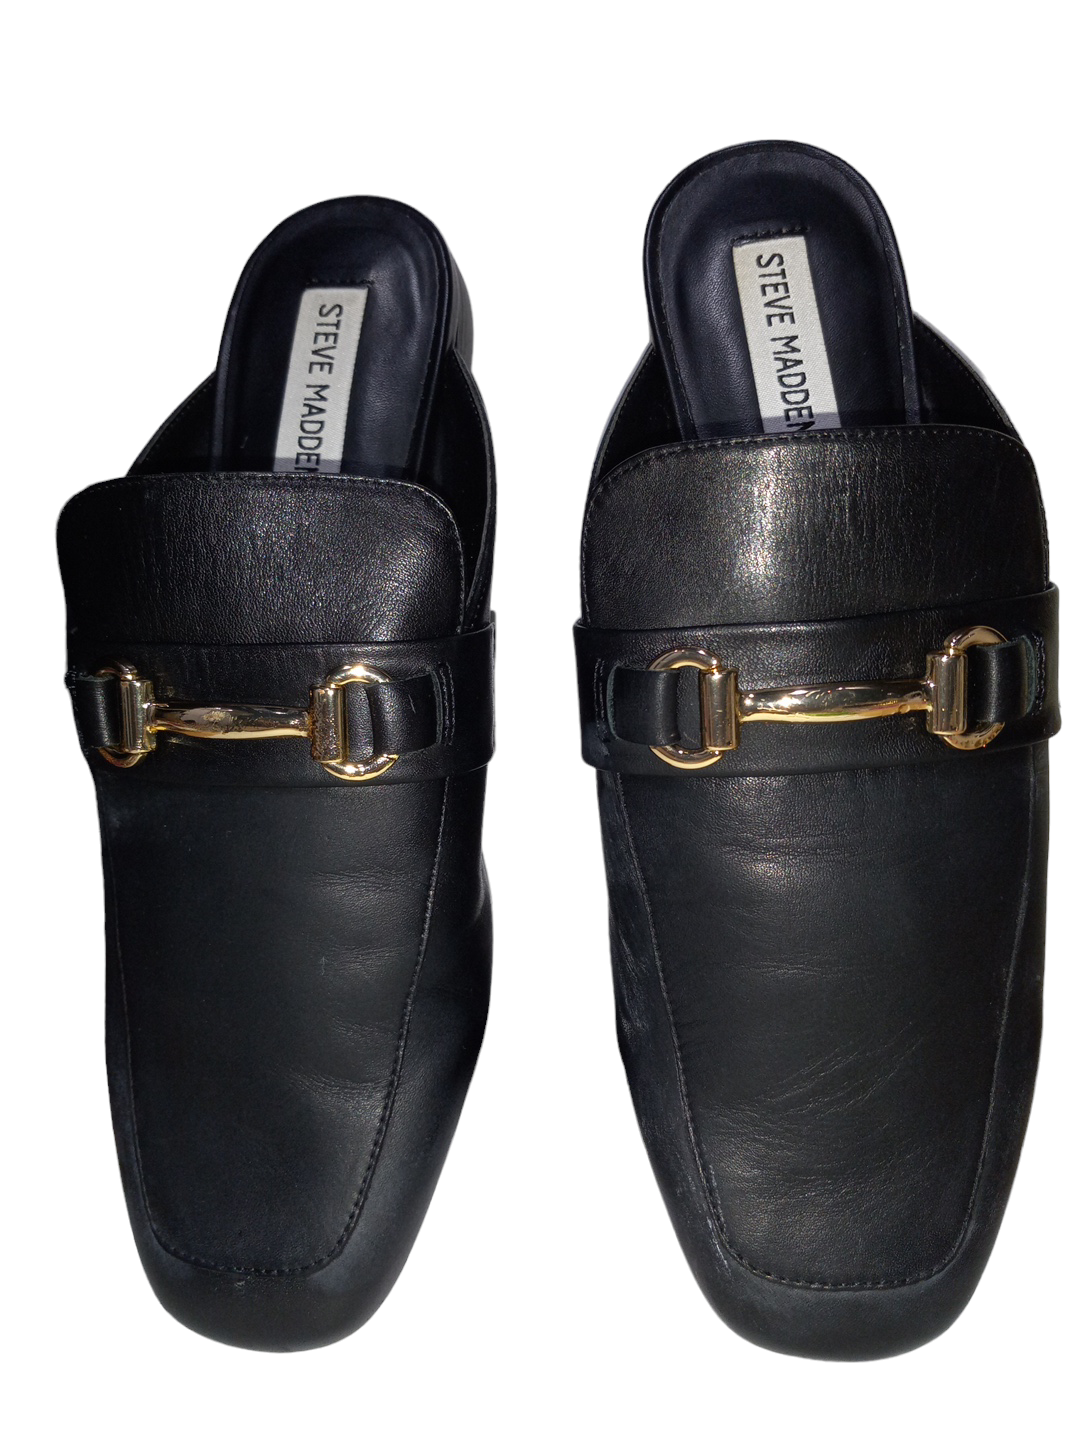 Black Shoes Flats Steve Madden, Size 8.5